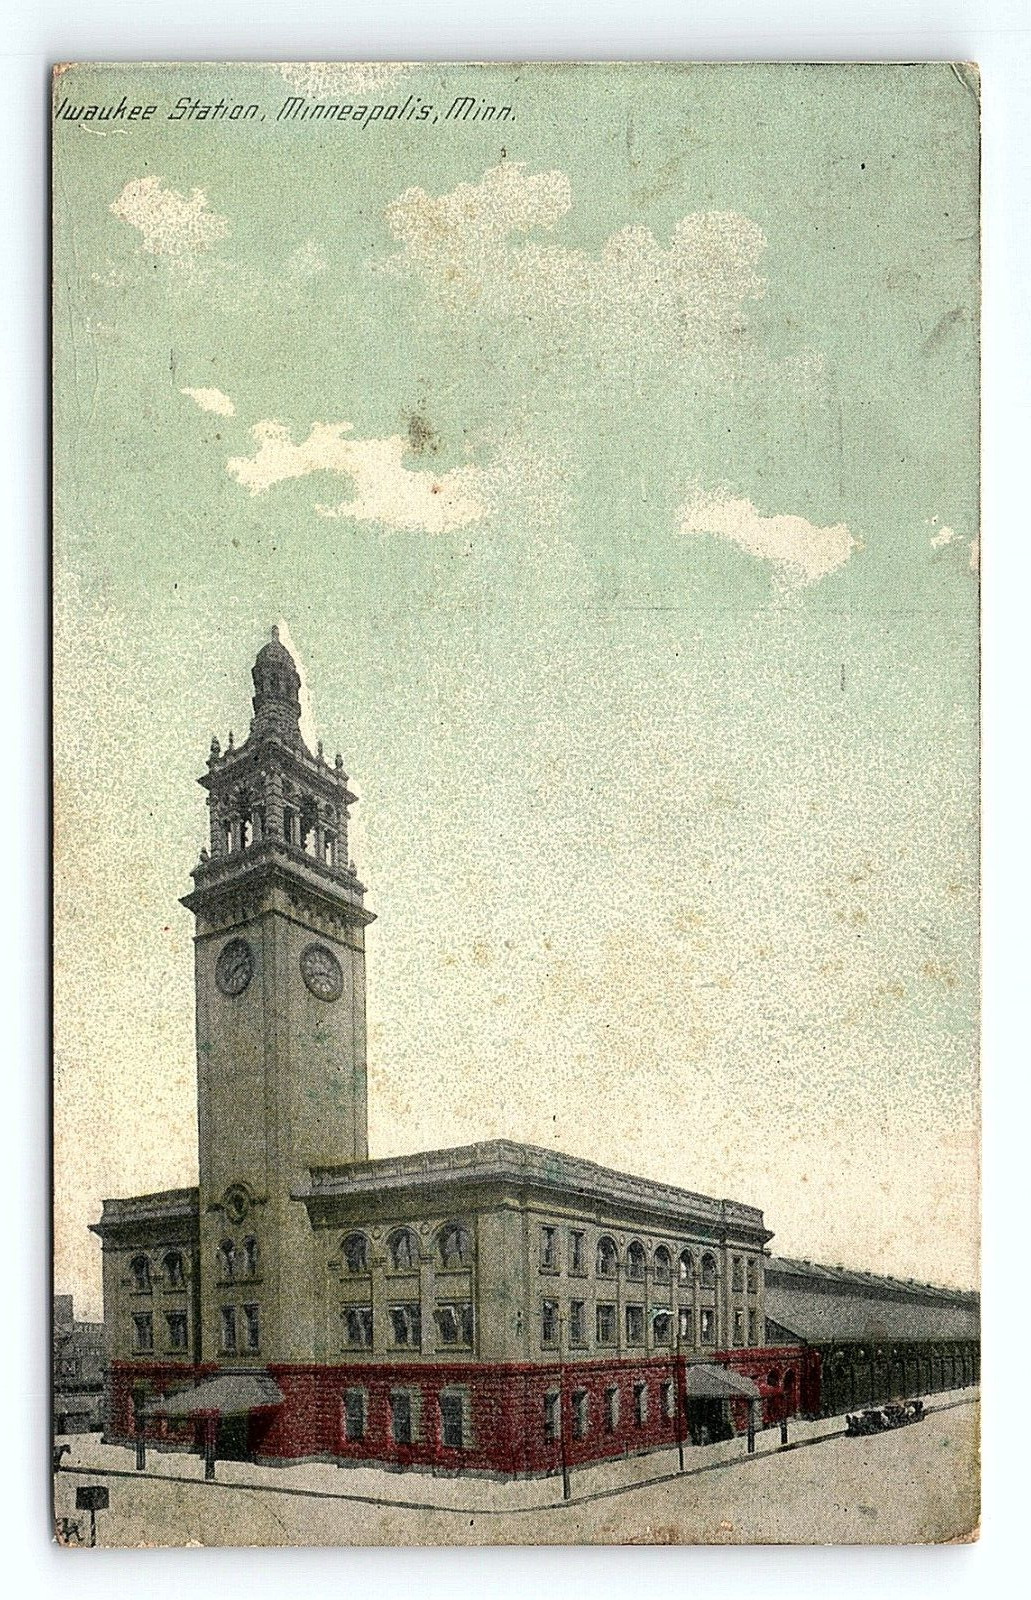 Waukee Station Railroad Train Minneapolis Minnesota MN Clock Tower VTG Postcard